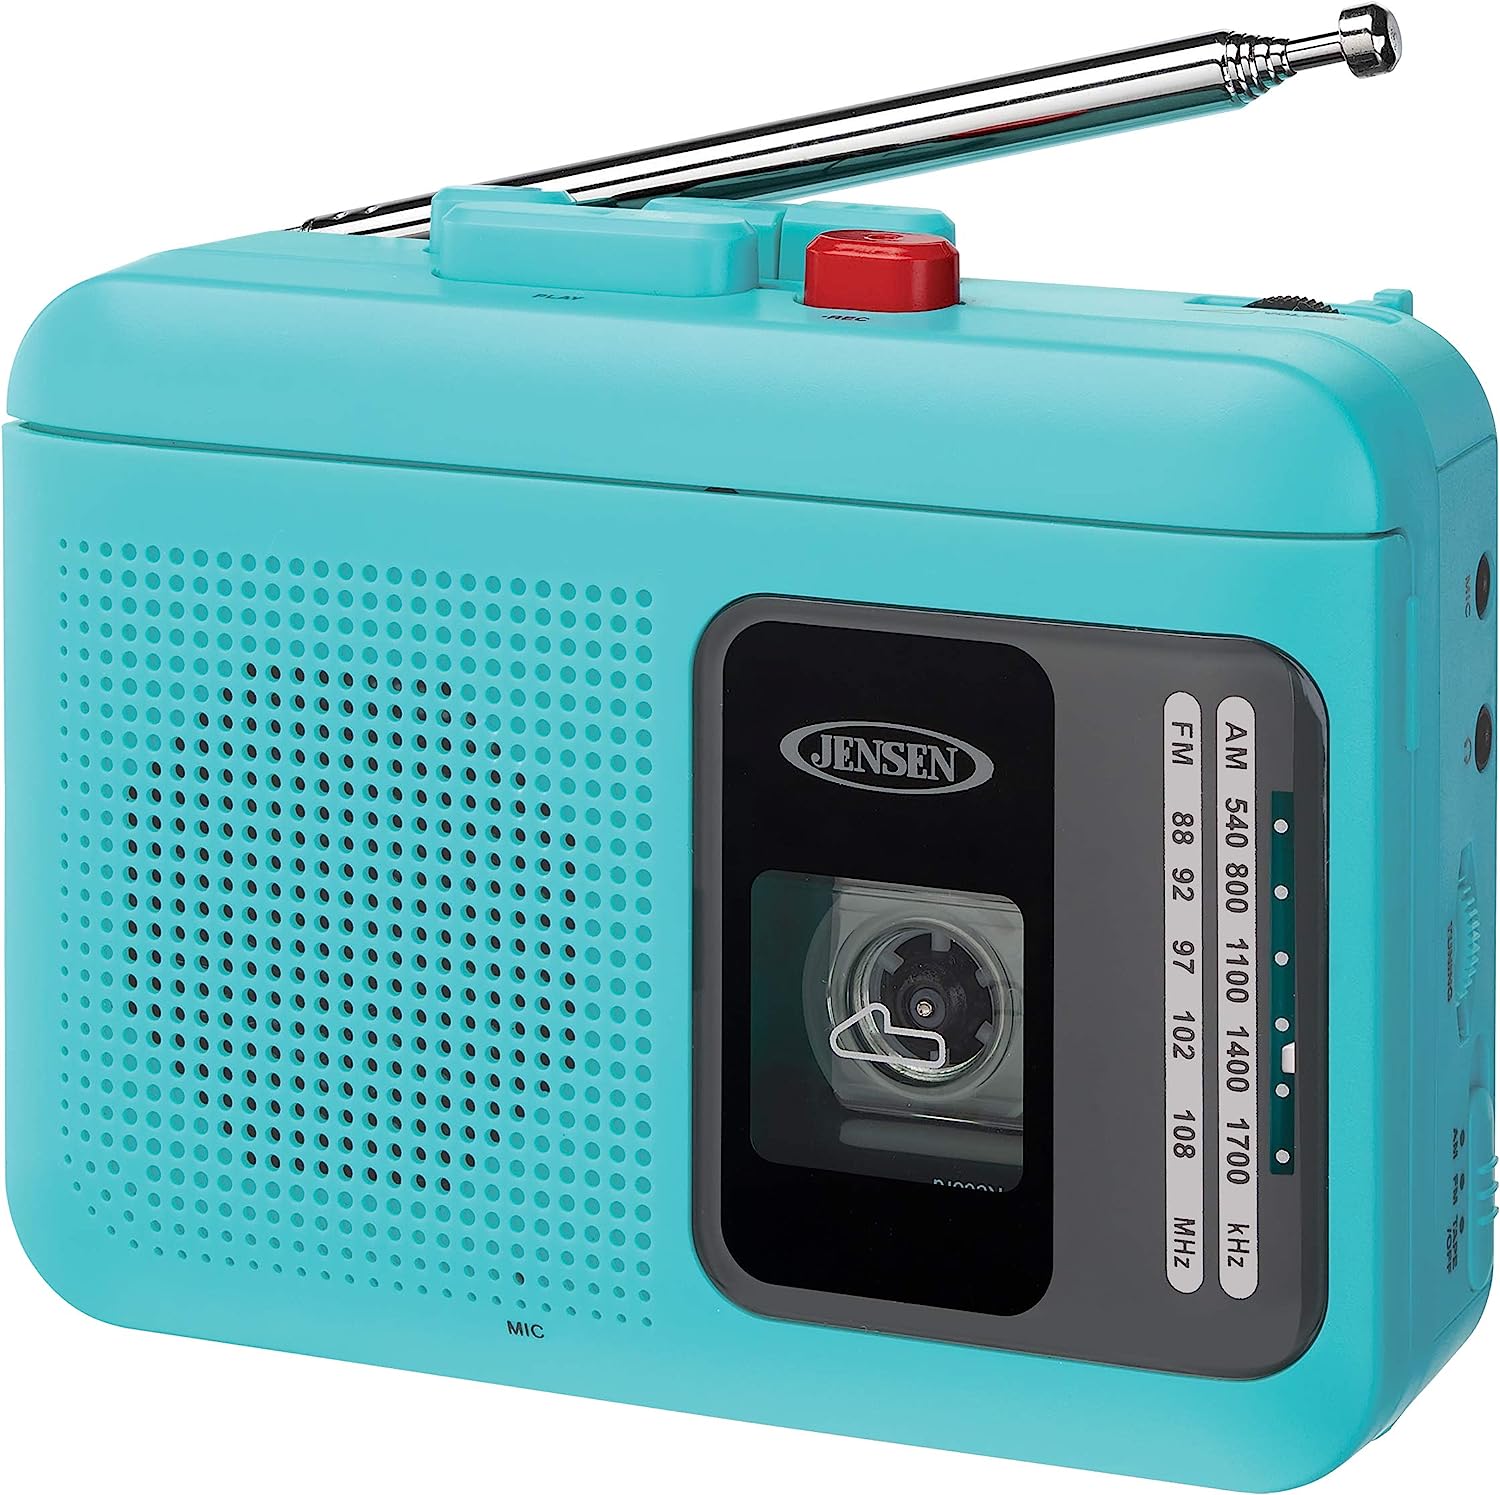 Jensen MCR-75 Personal Portable AM/FM Radio Cassette [...]